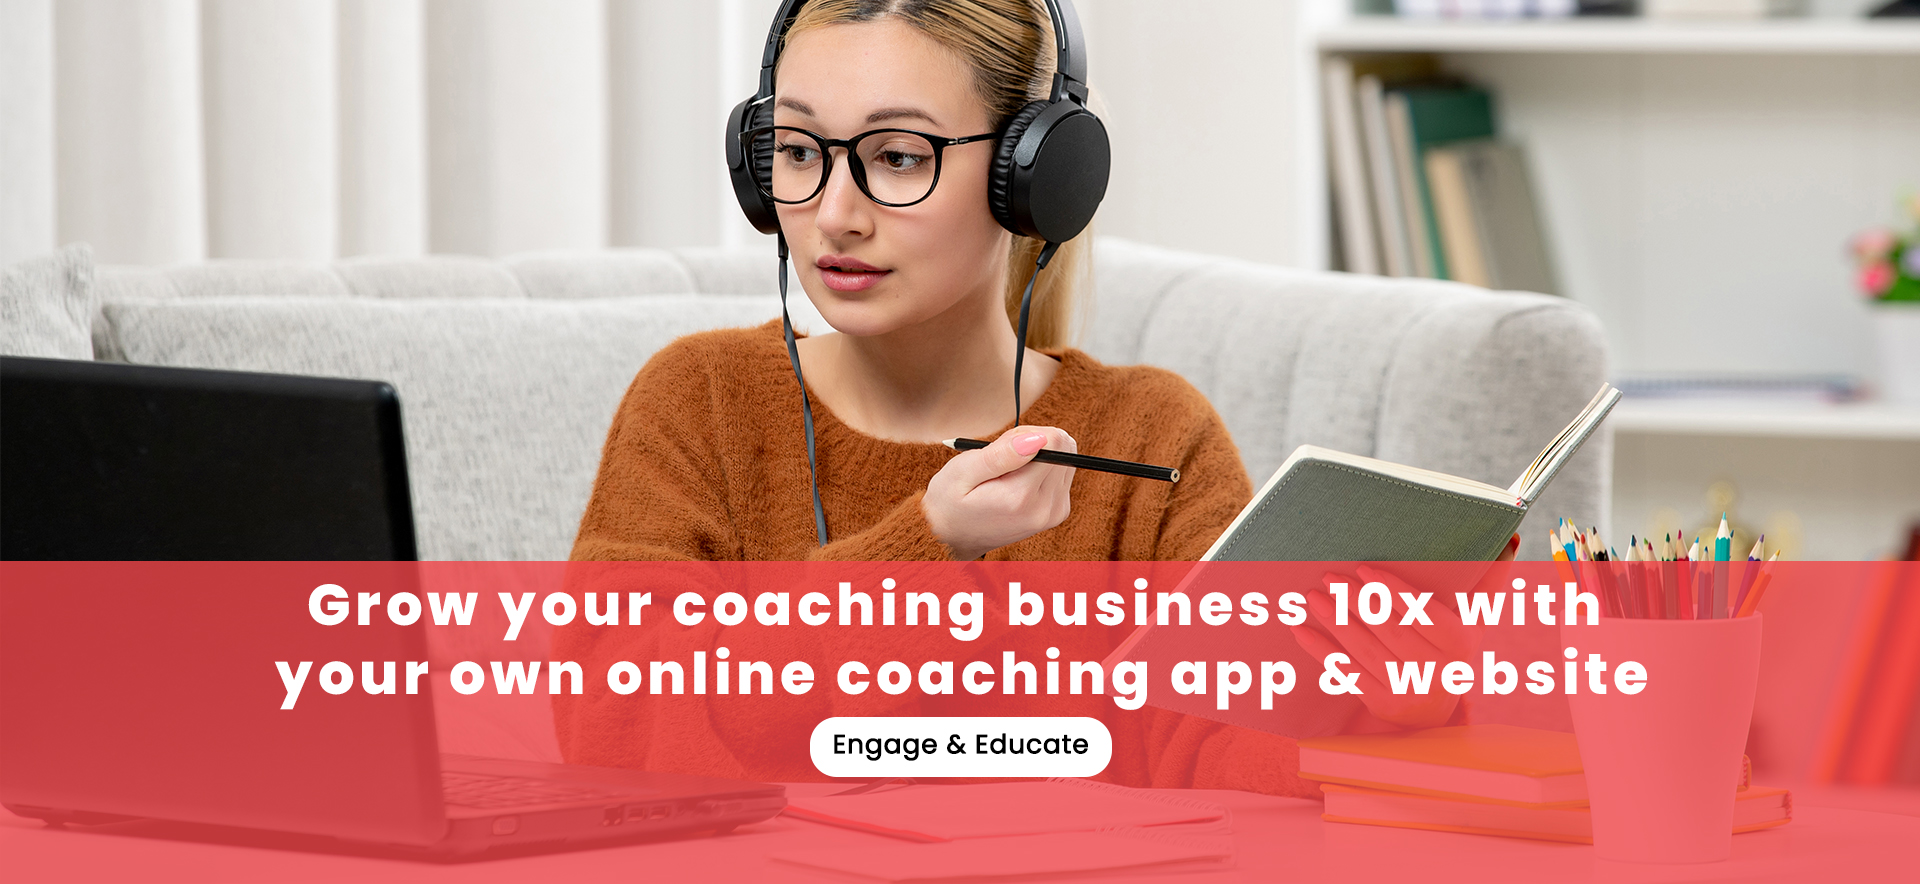 Build your own online coaching app & website